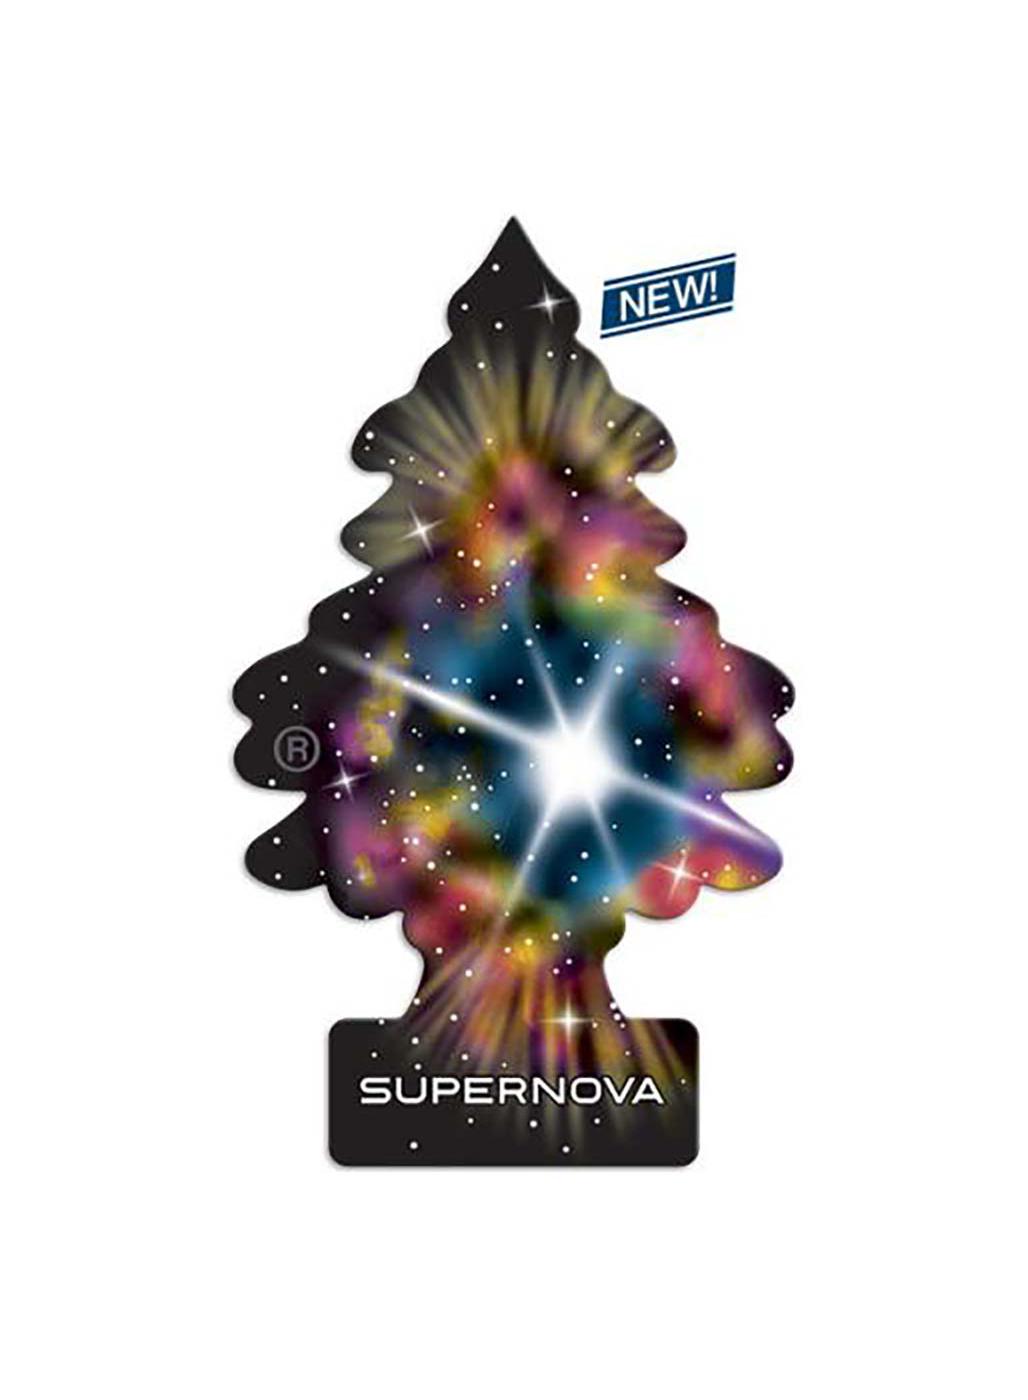 Little Trees Car Air Fresheners - Supernova; image 2 of 2